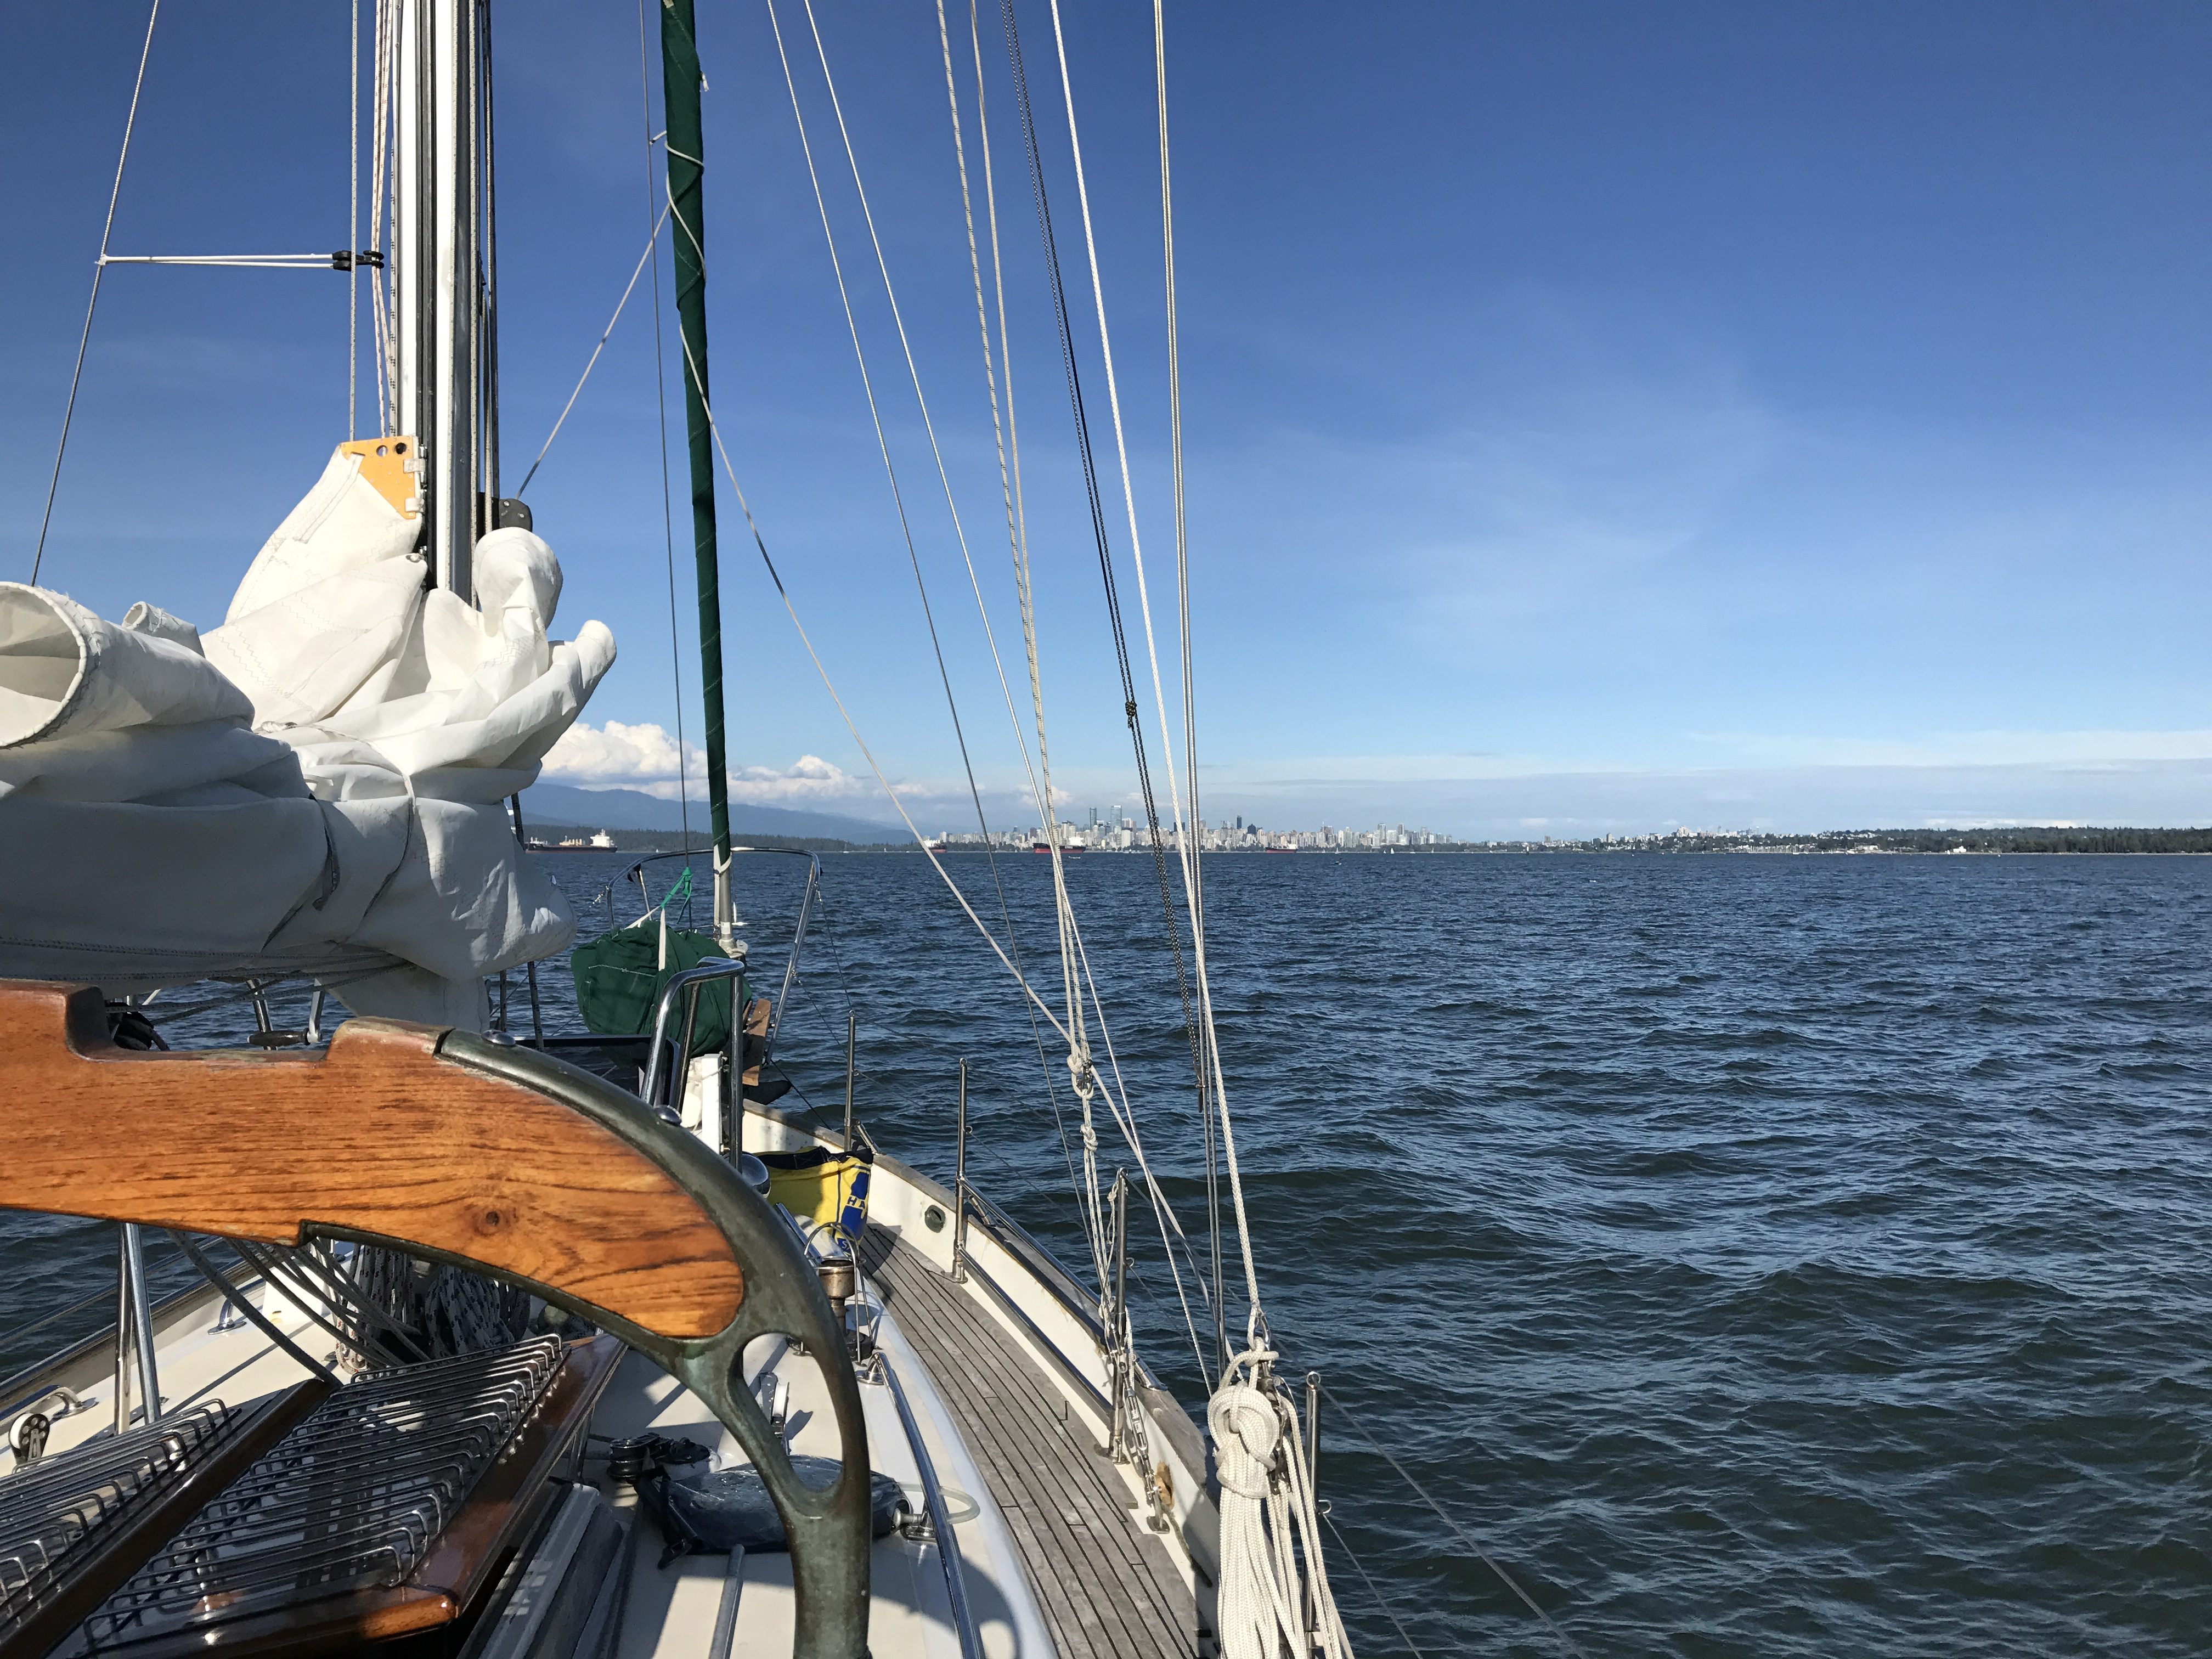 Vancouver on the horizon